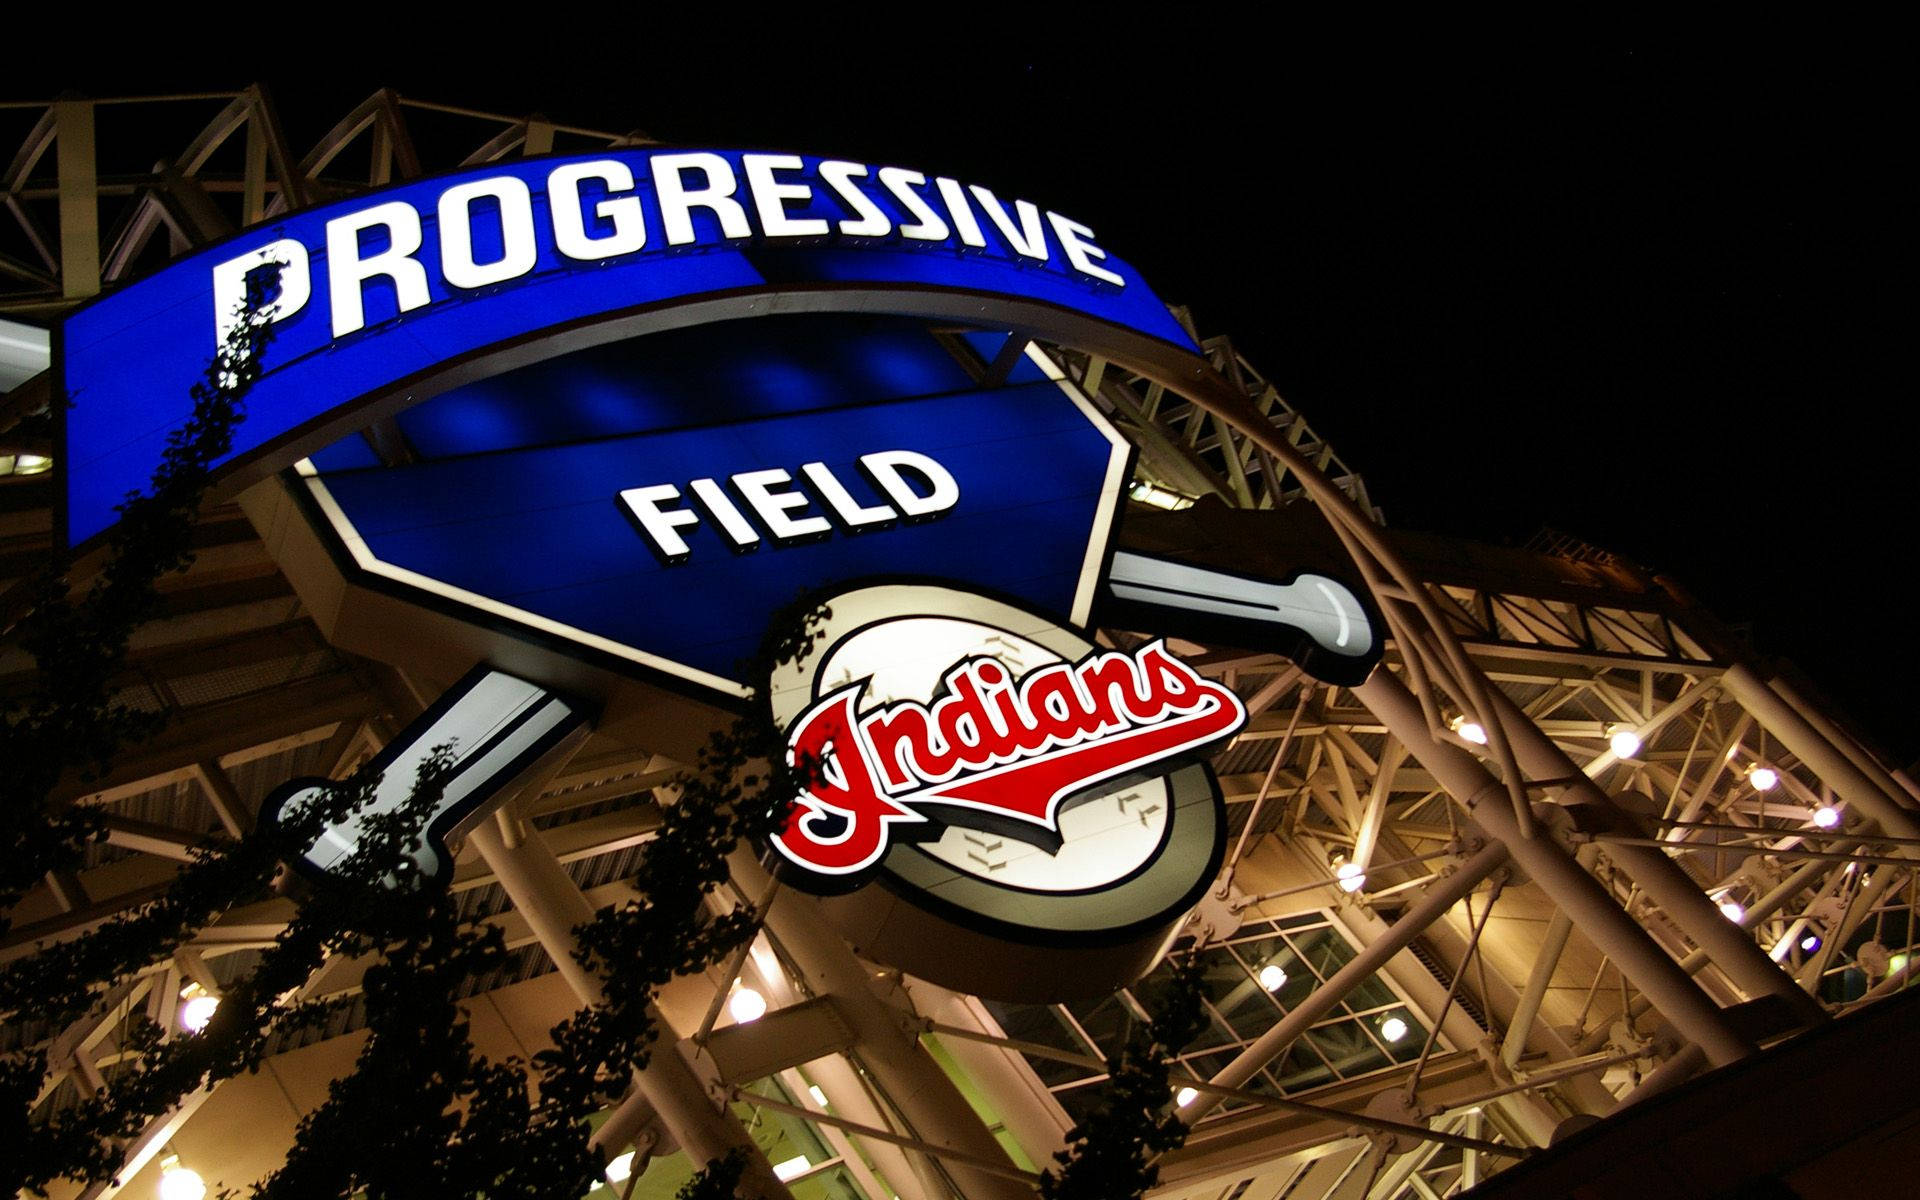 Clevelandindians Progress Field Entrance: Cleveland Indians Progress Field Entré Wallpaper